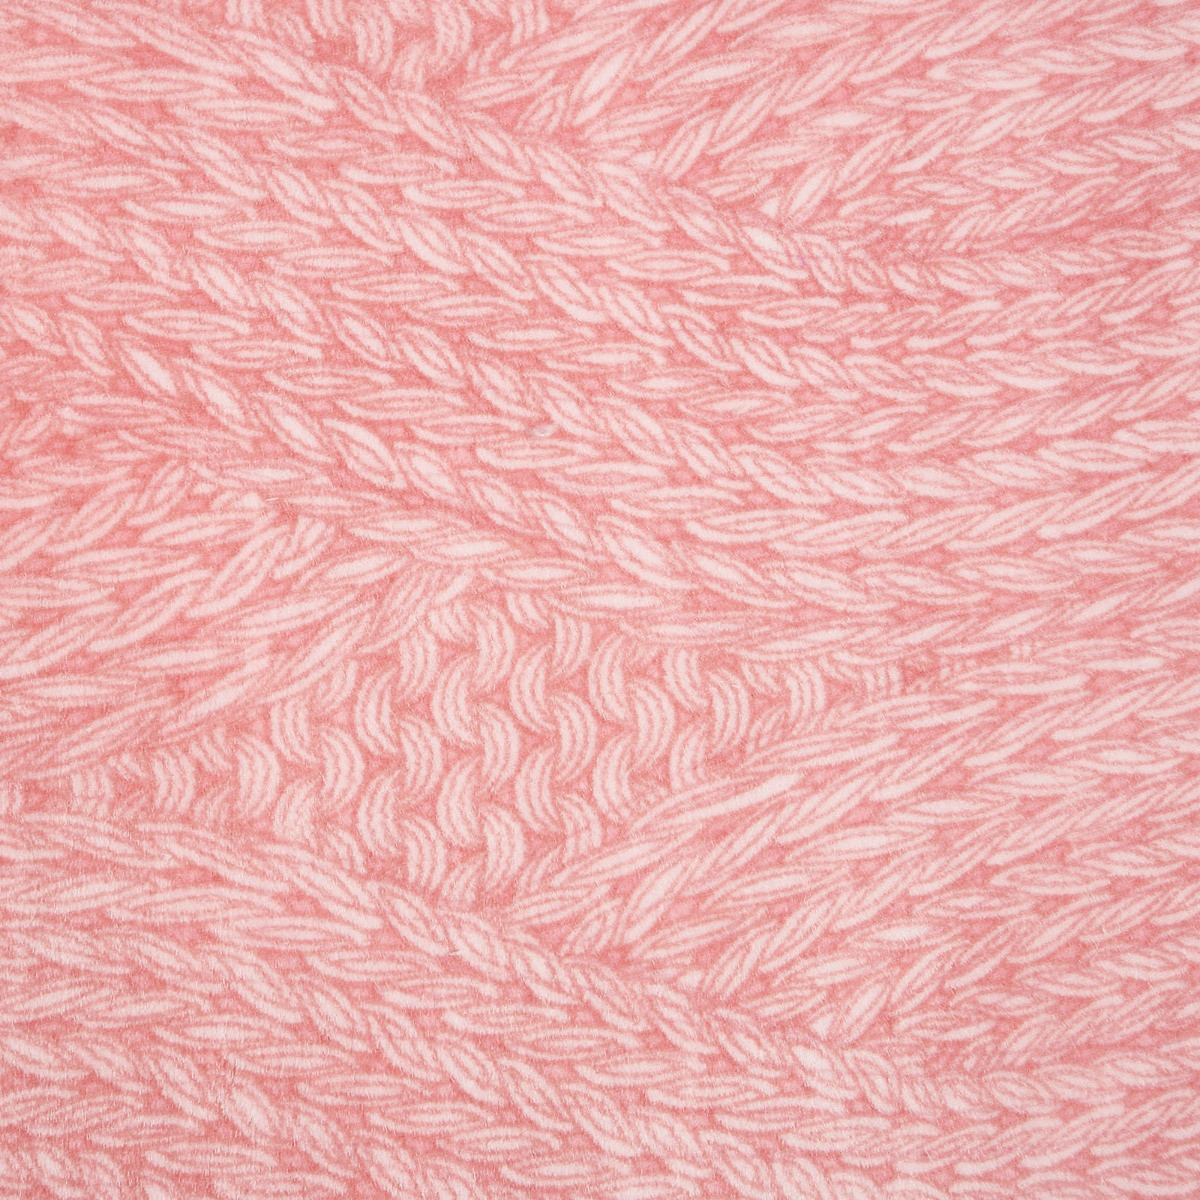 Dreamscene Chunky Knit Sherpa Throw, Blush - 150 x 180cm>